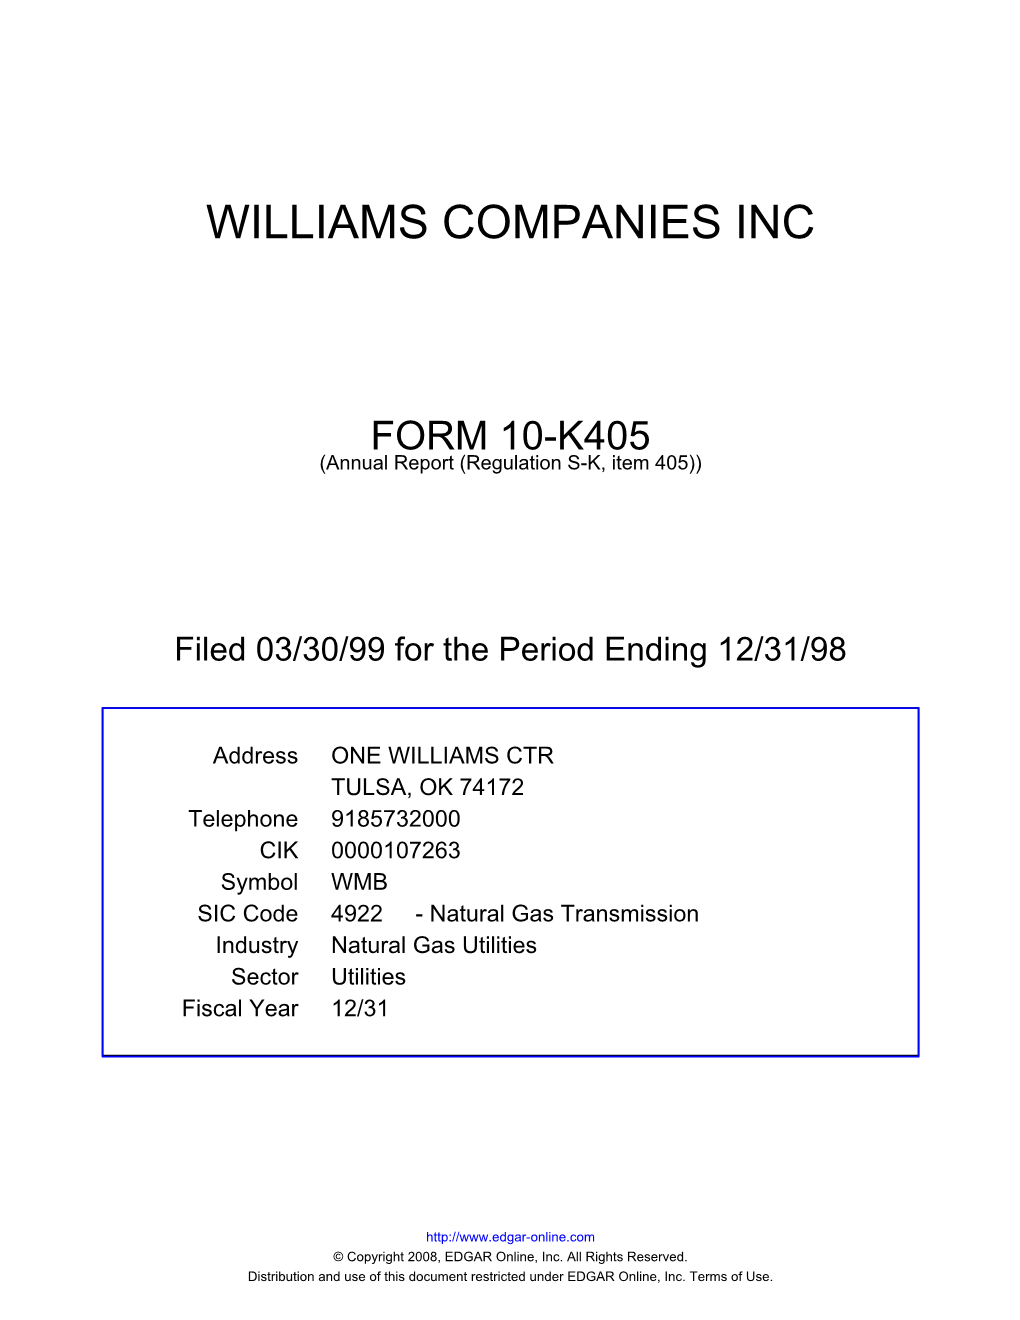 Williams Companies Inc